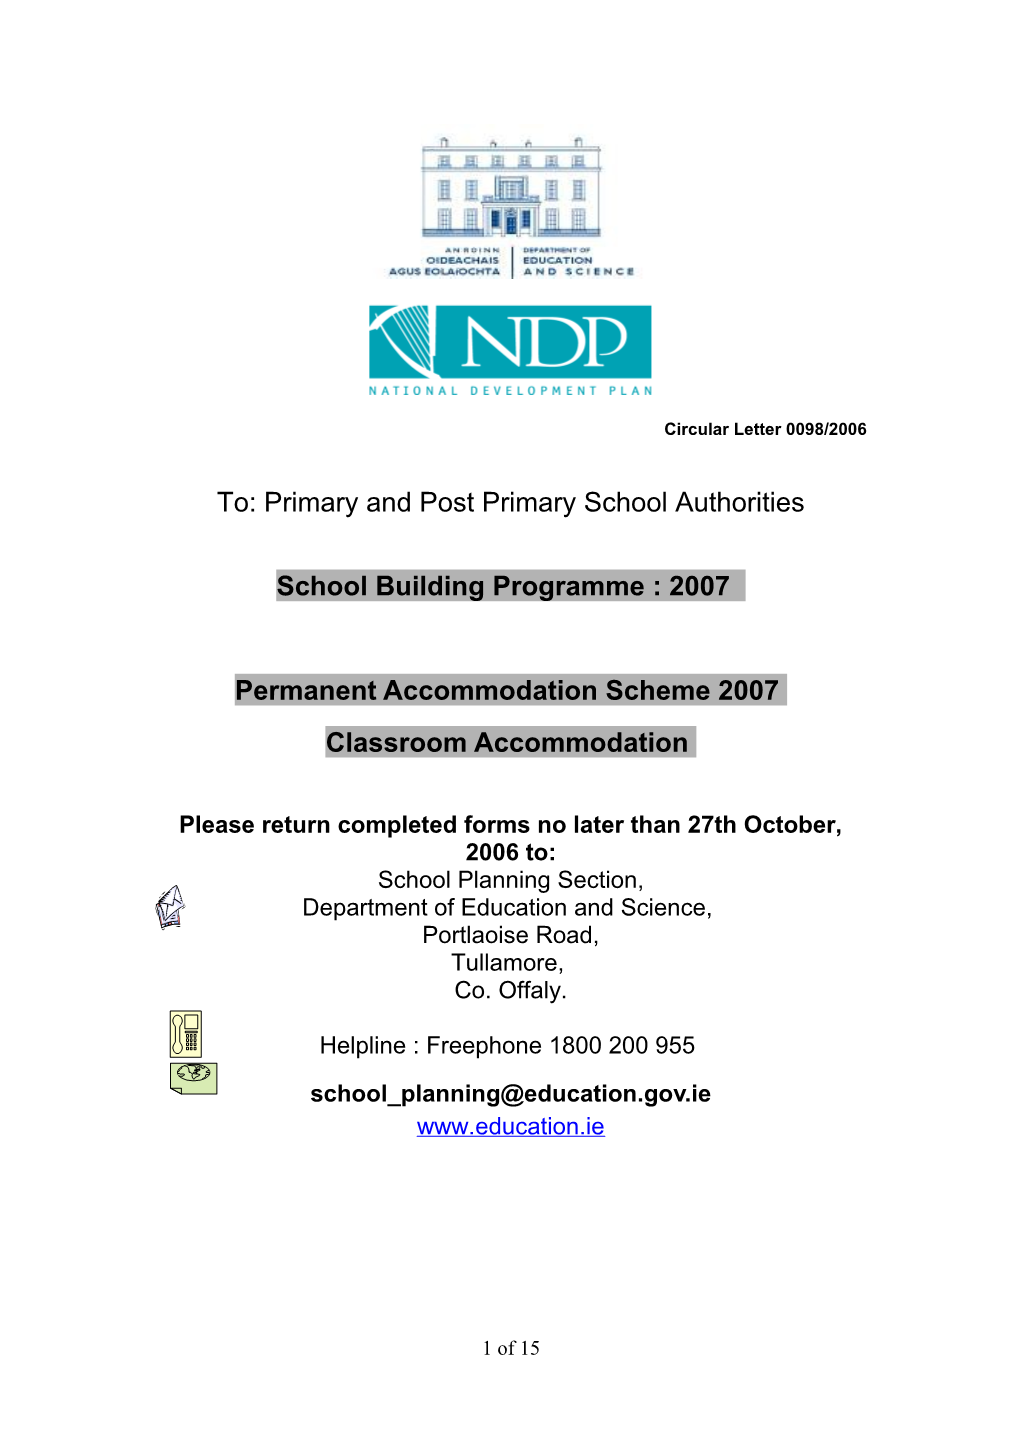 Circular 0098/2006 - School Building Programme : 2007 - Permanent Accommodation Scheme